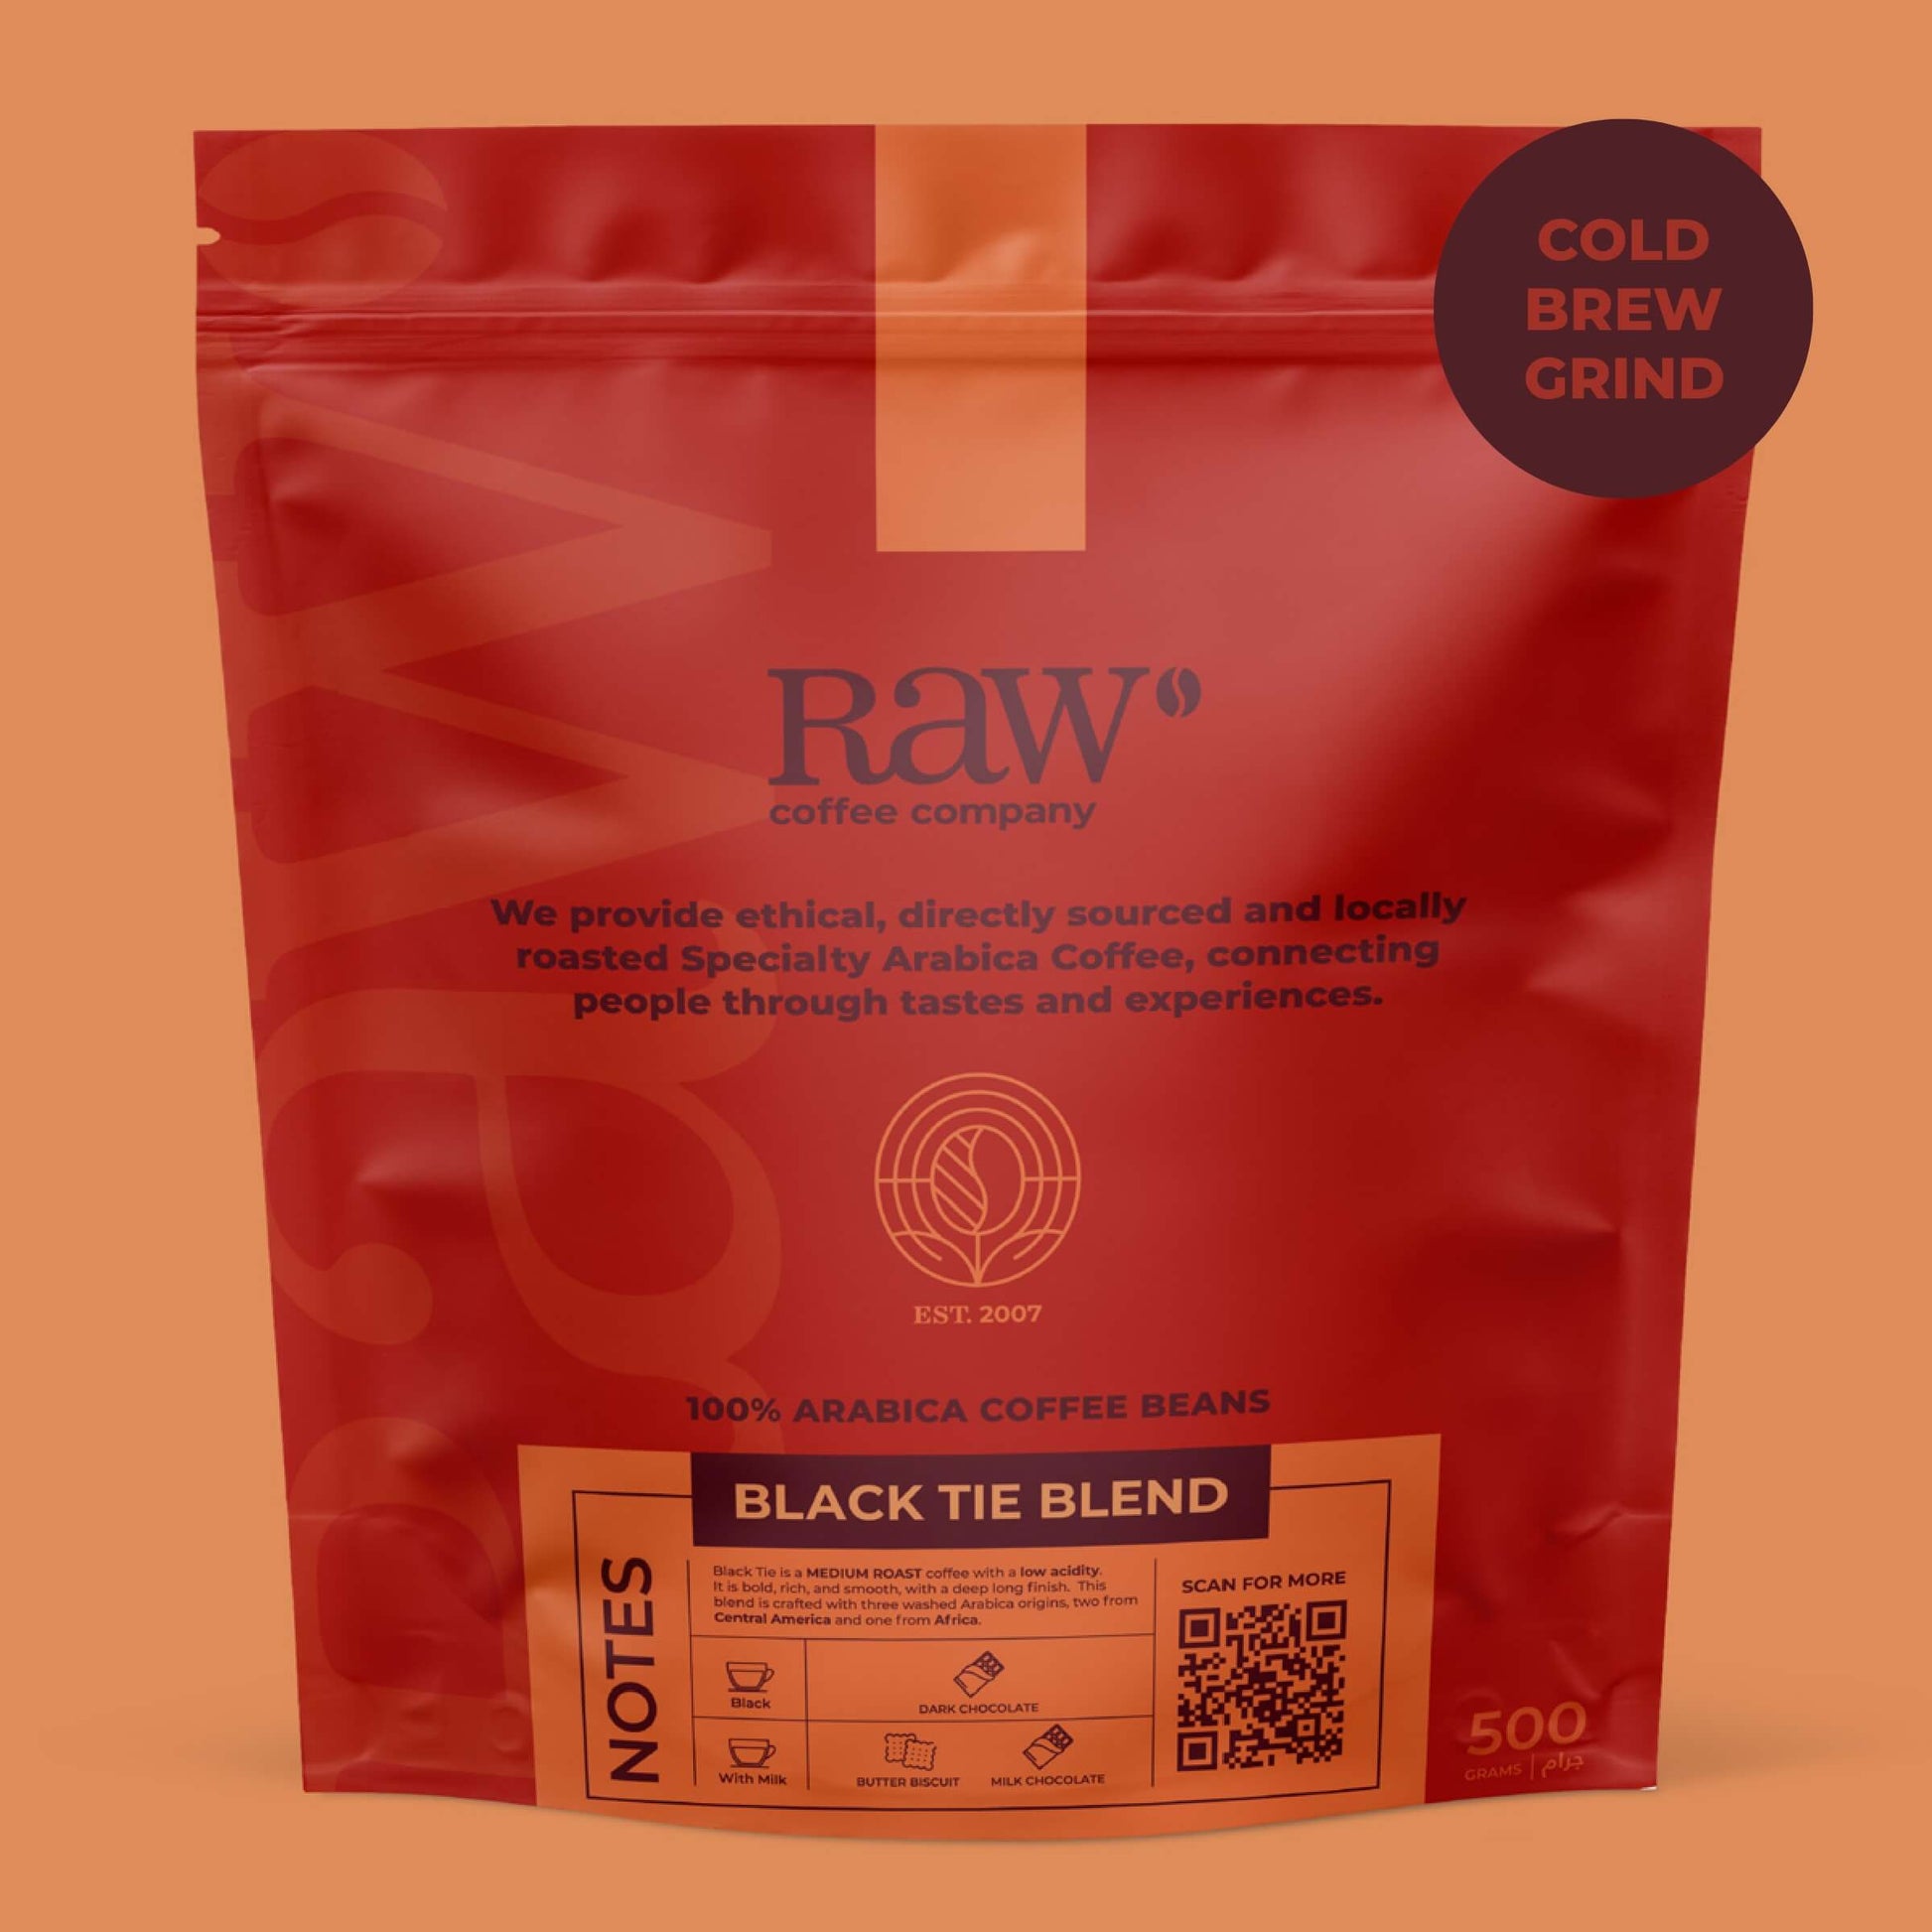 Black-Tie-Blend-Coffee-Cold-Brew-500gm_RAW-Coffee-Company